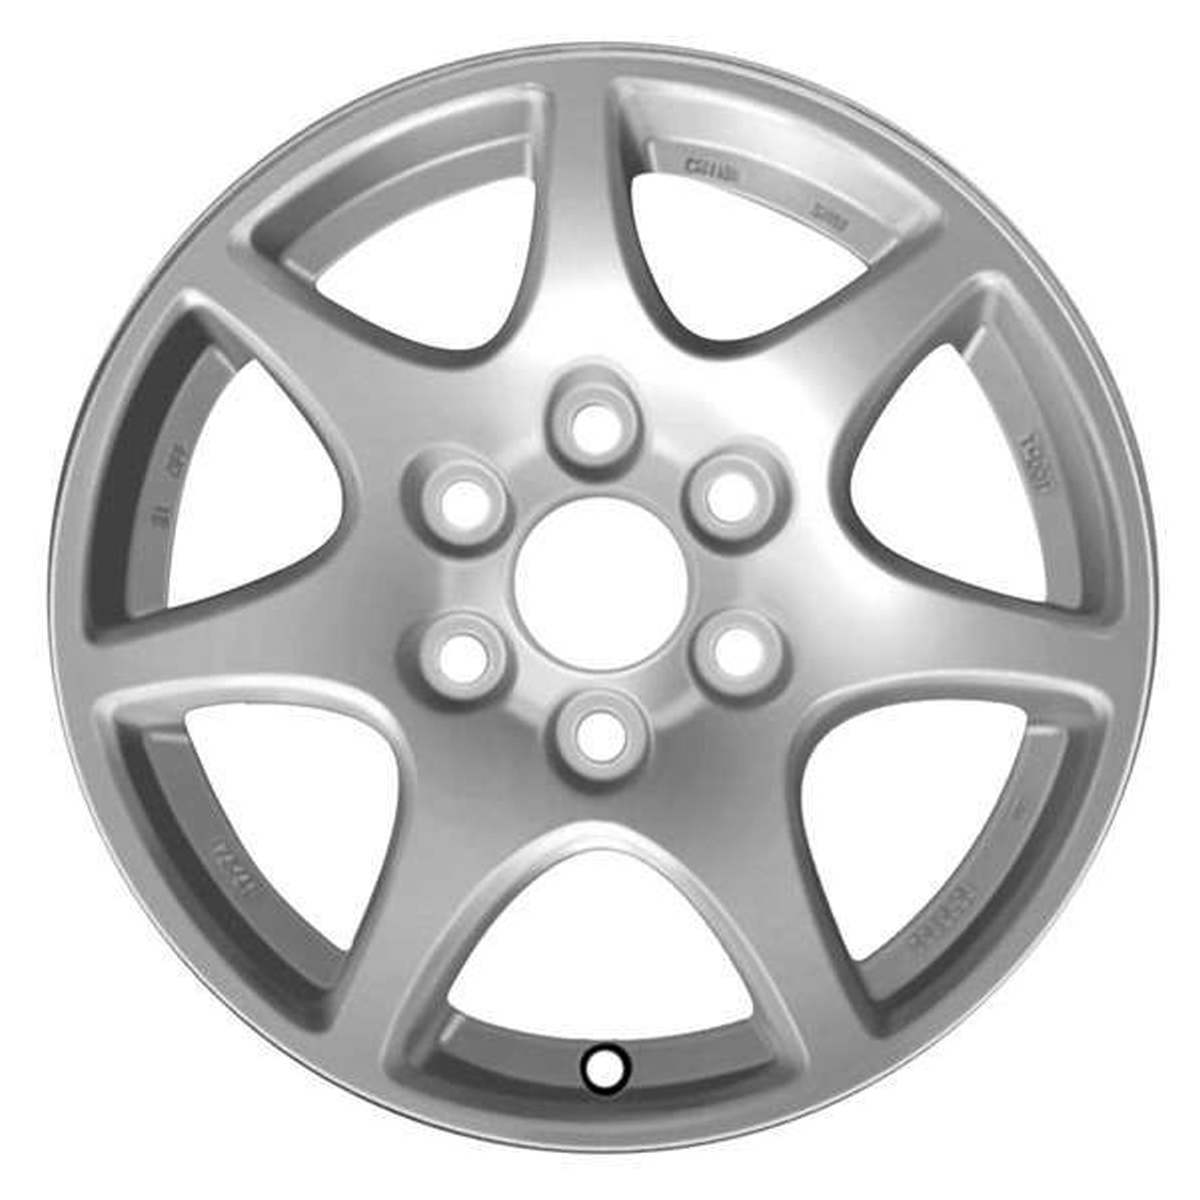 2014 Chevrolet Silverado 1500 17" OEM Wheel Rim W5292C